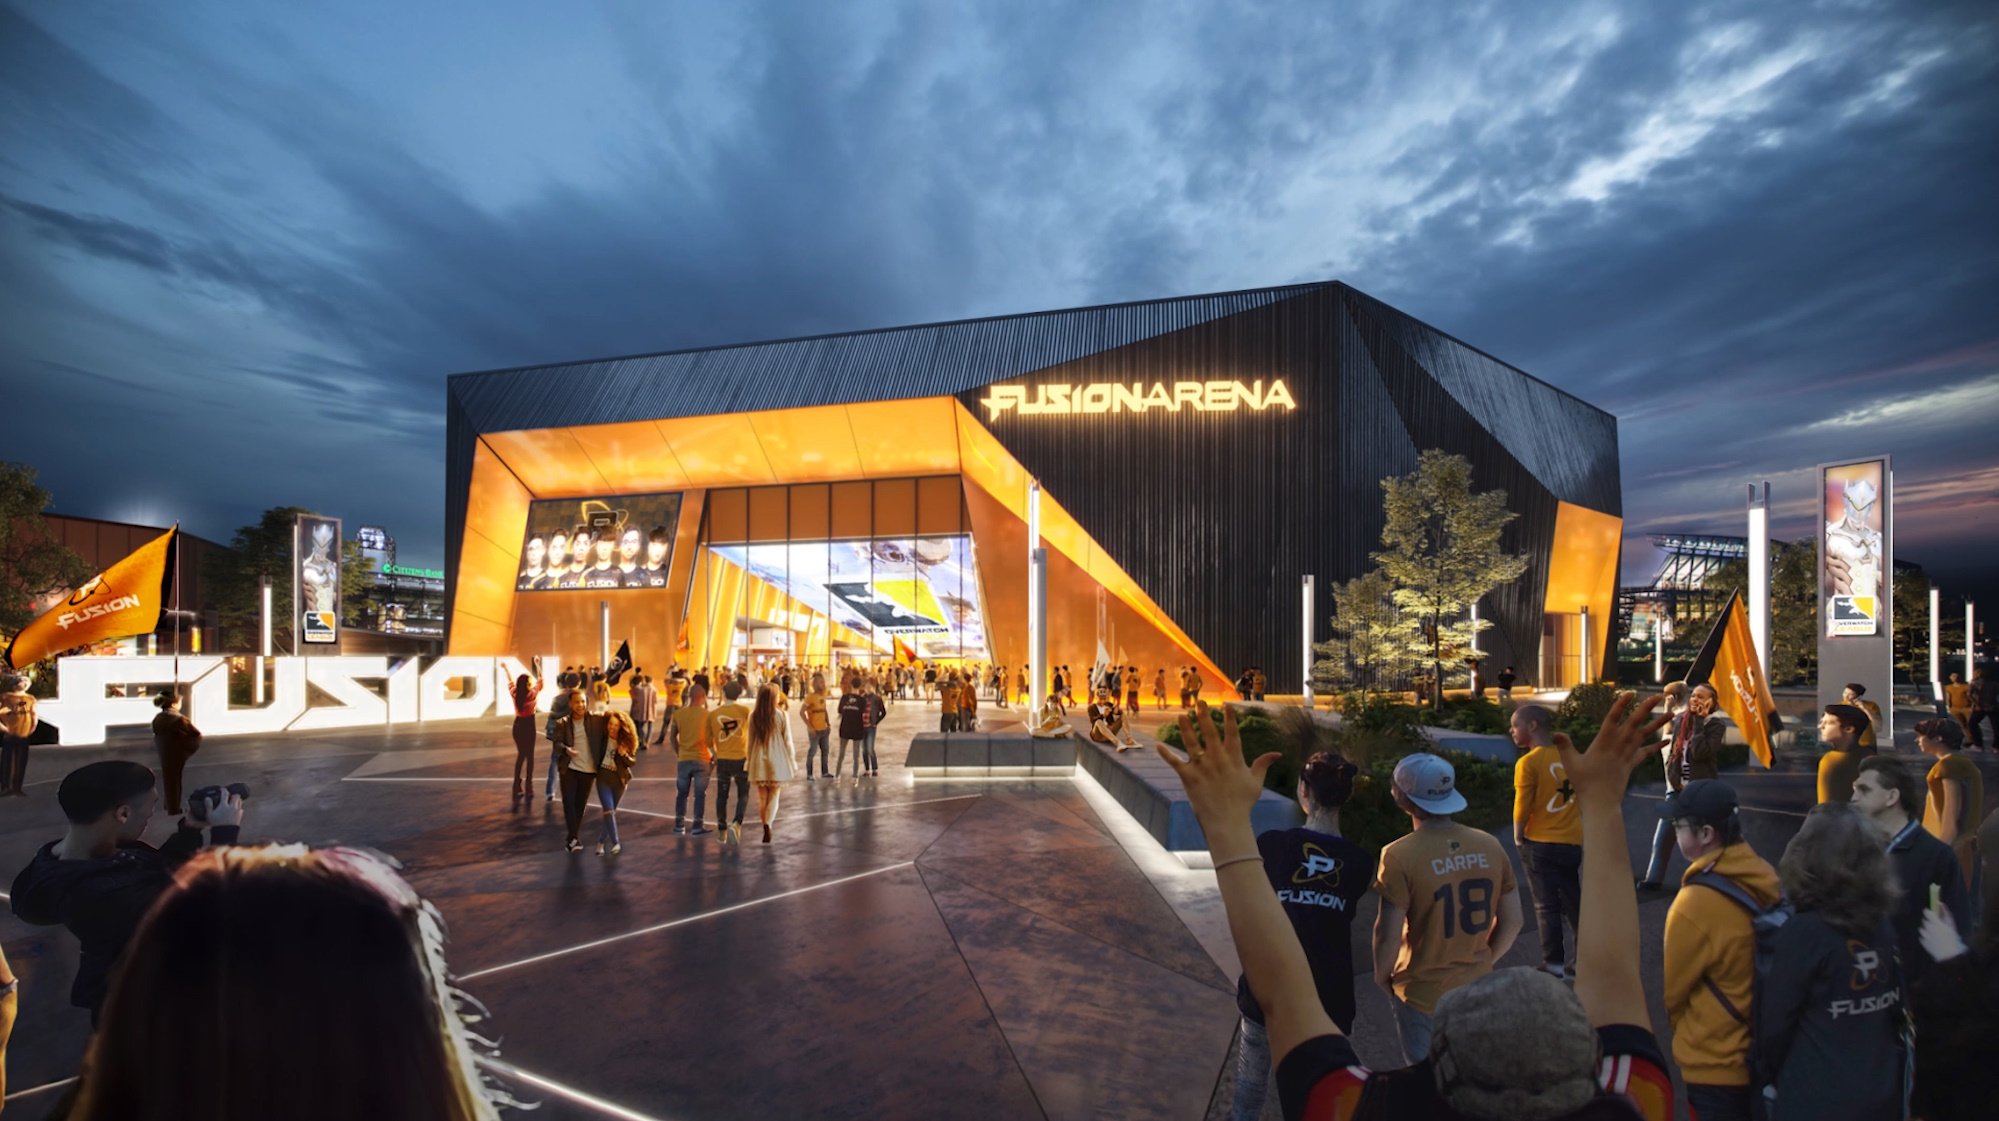 Comcast Spectacor to build $50M 'Fusion Arena' for Philadelphia Fusion